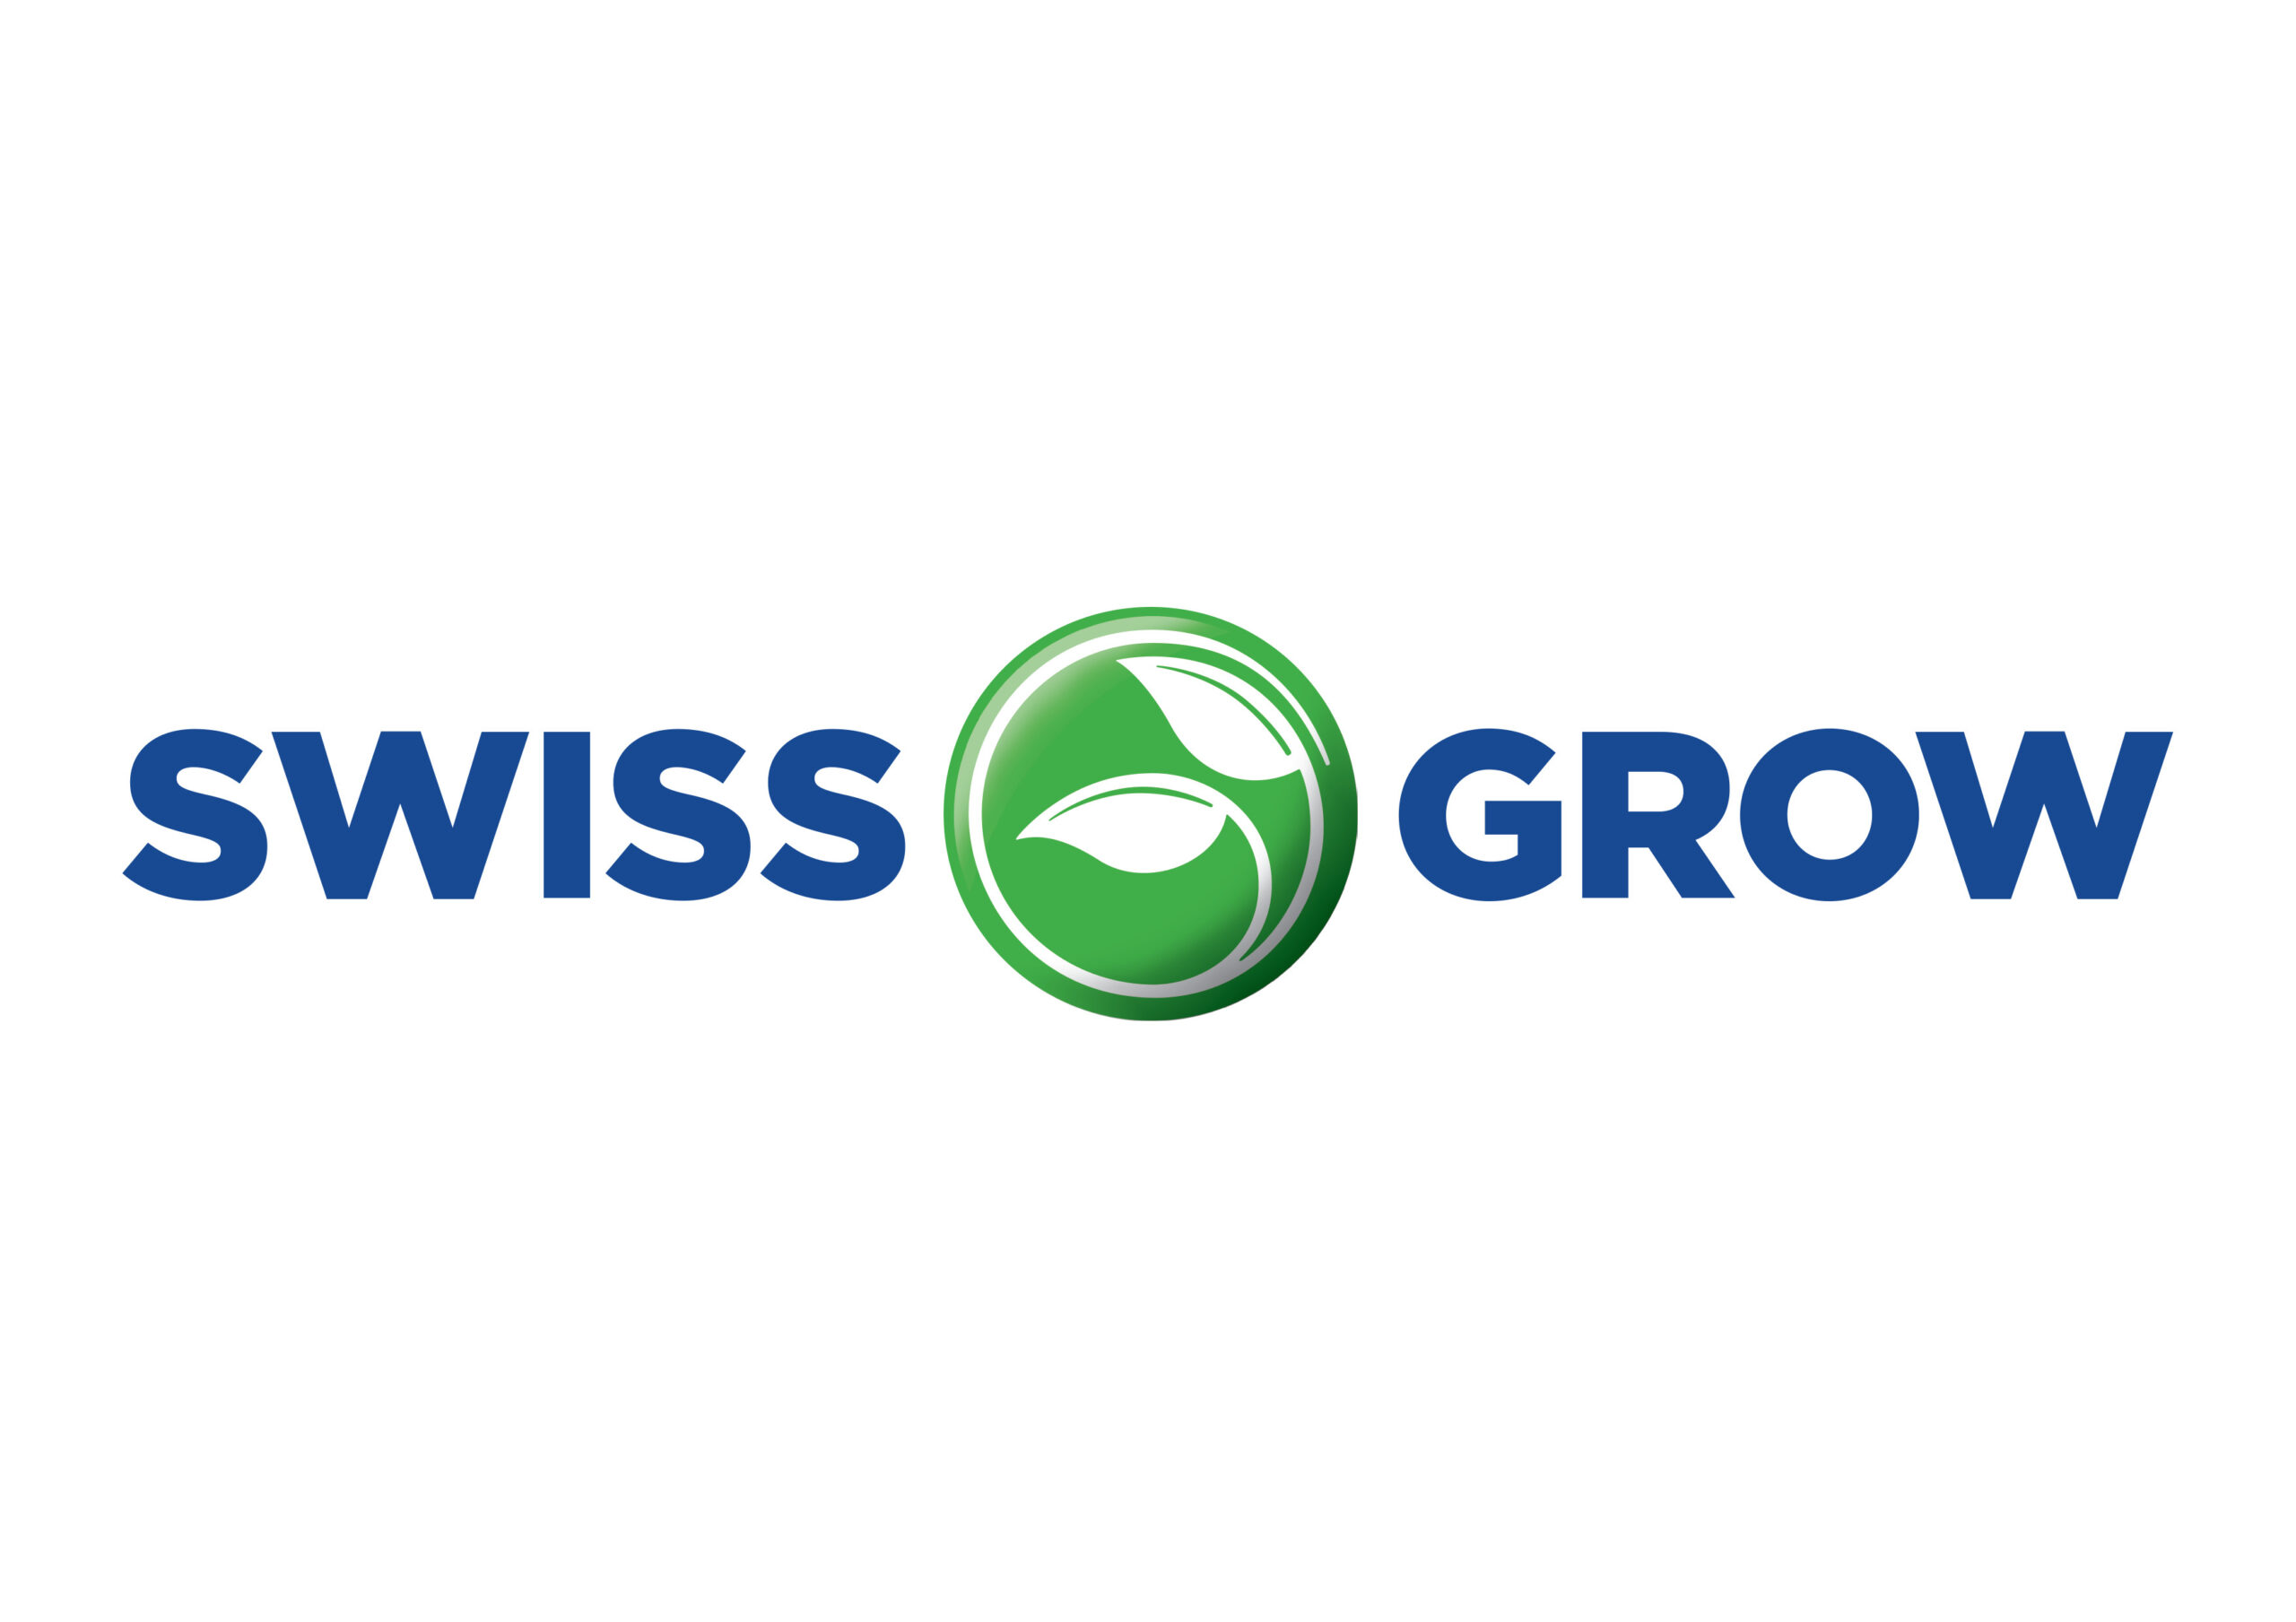 SWISS GROW